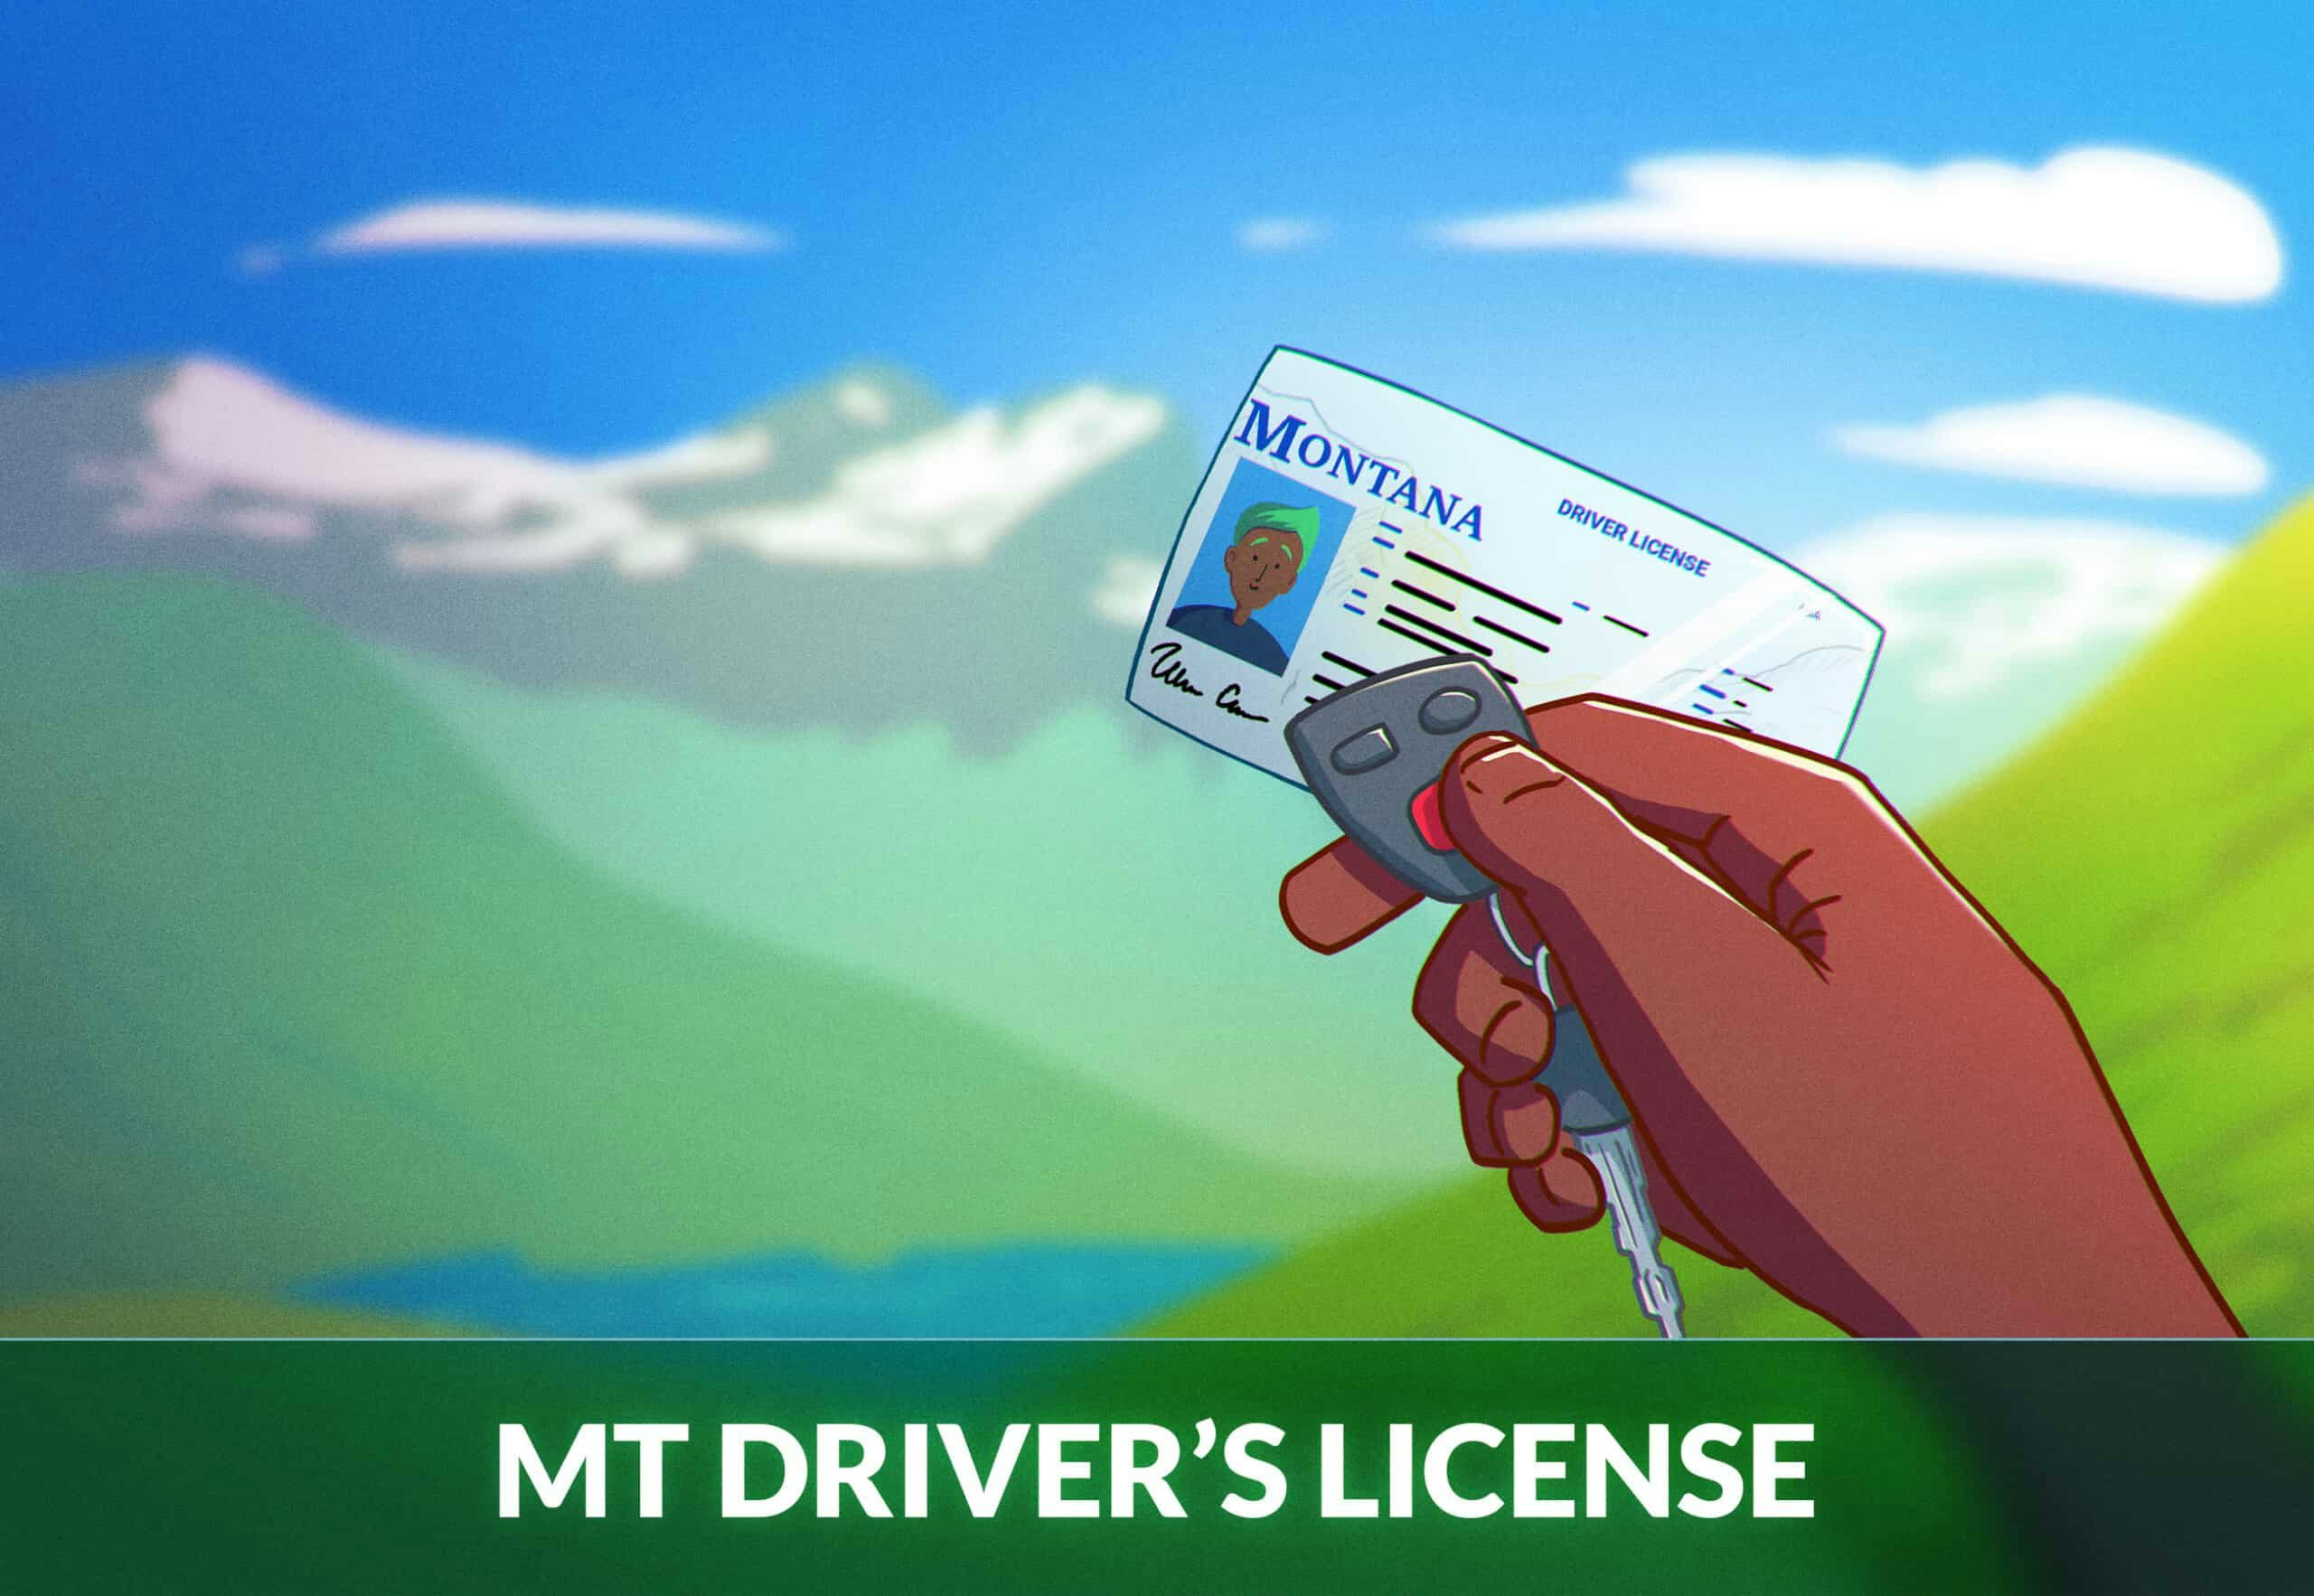 Montana driver's license